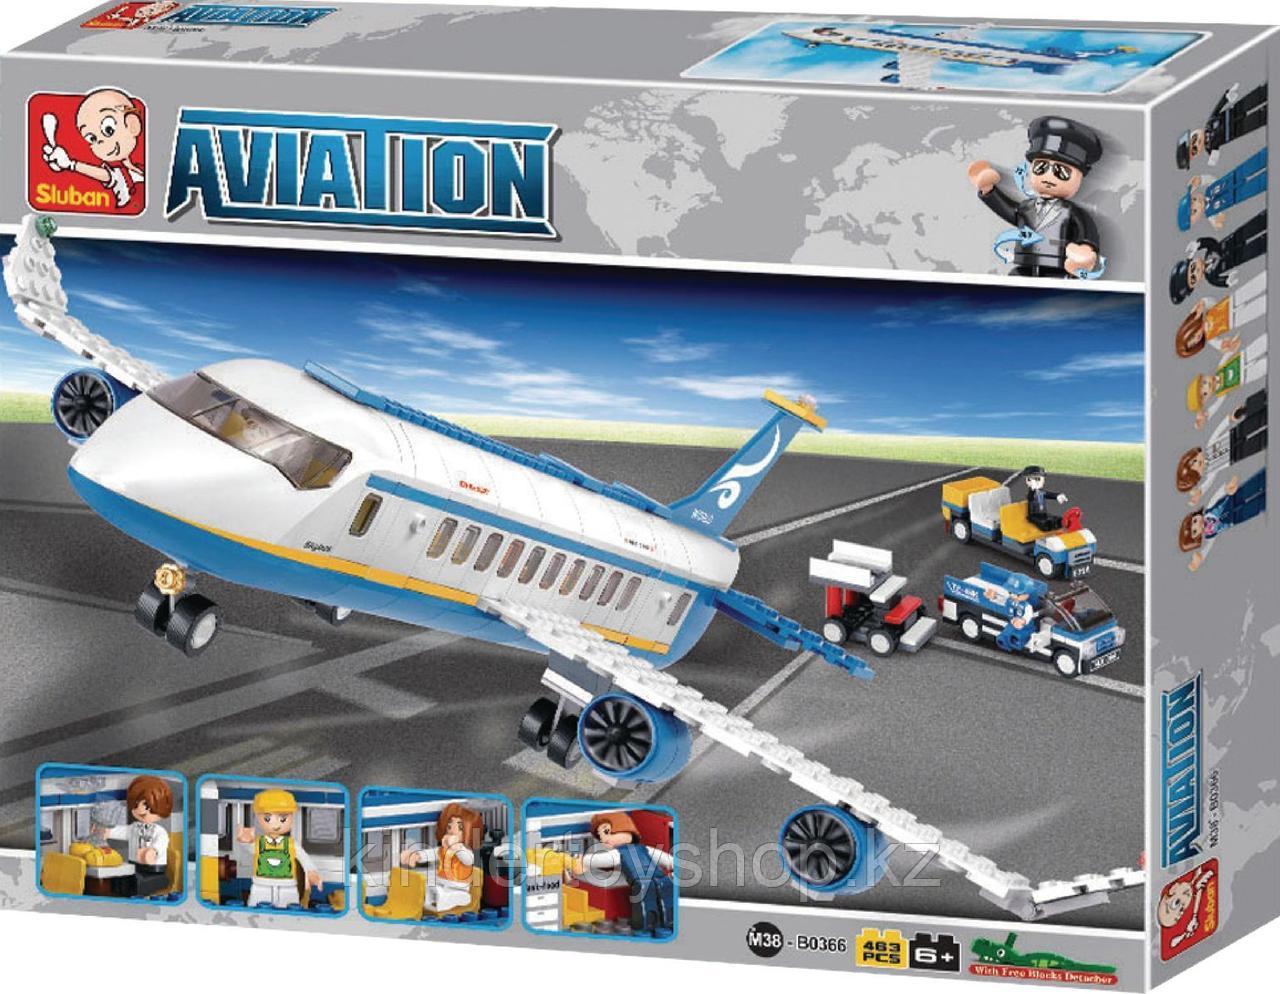 Конструктор Sluban Авиация: Аэробус , 493 деталей аналог лего Lego City Аэропорт